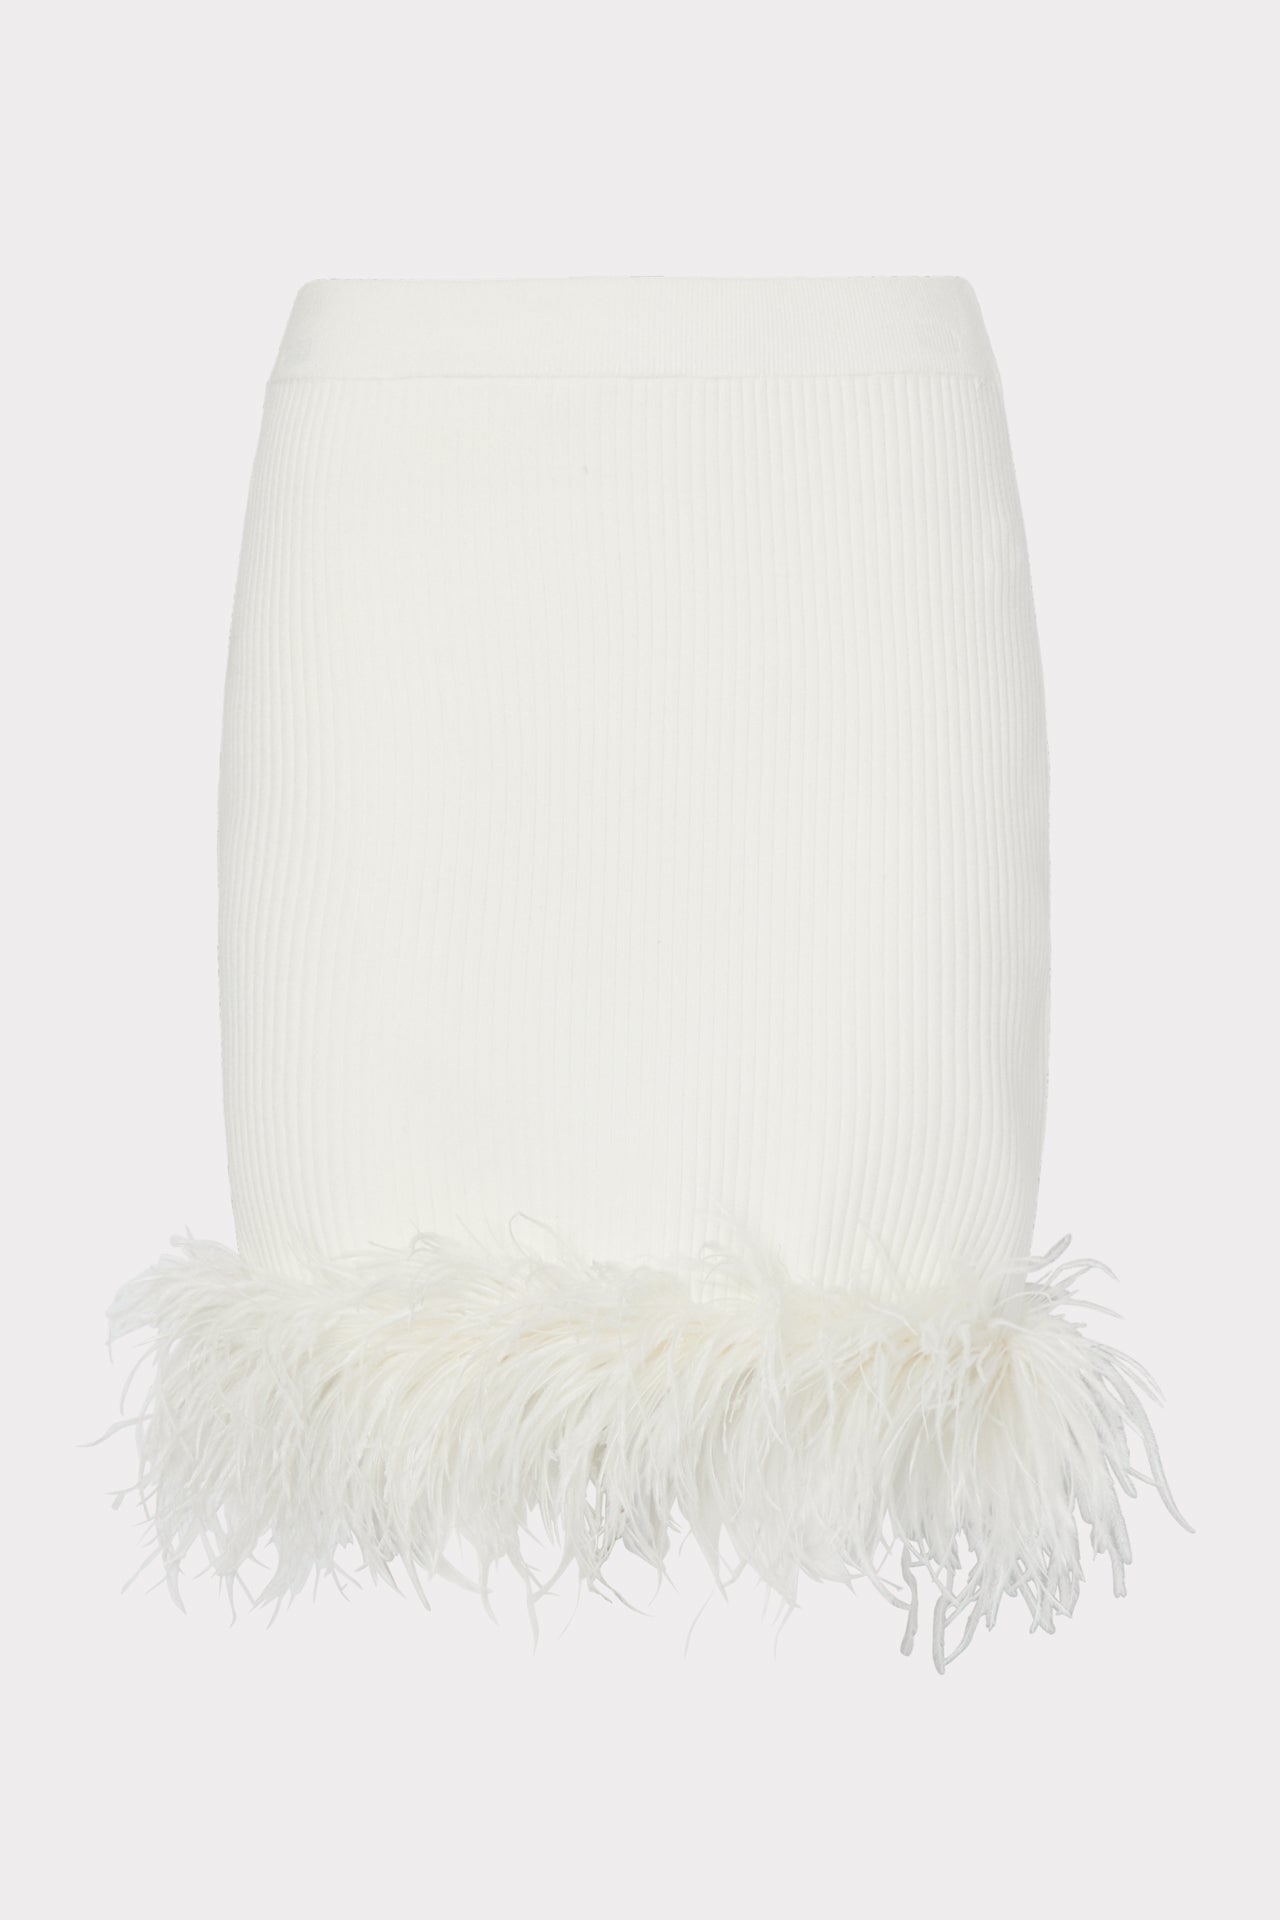 Boa Feather Skirt